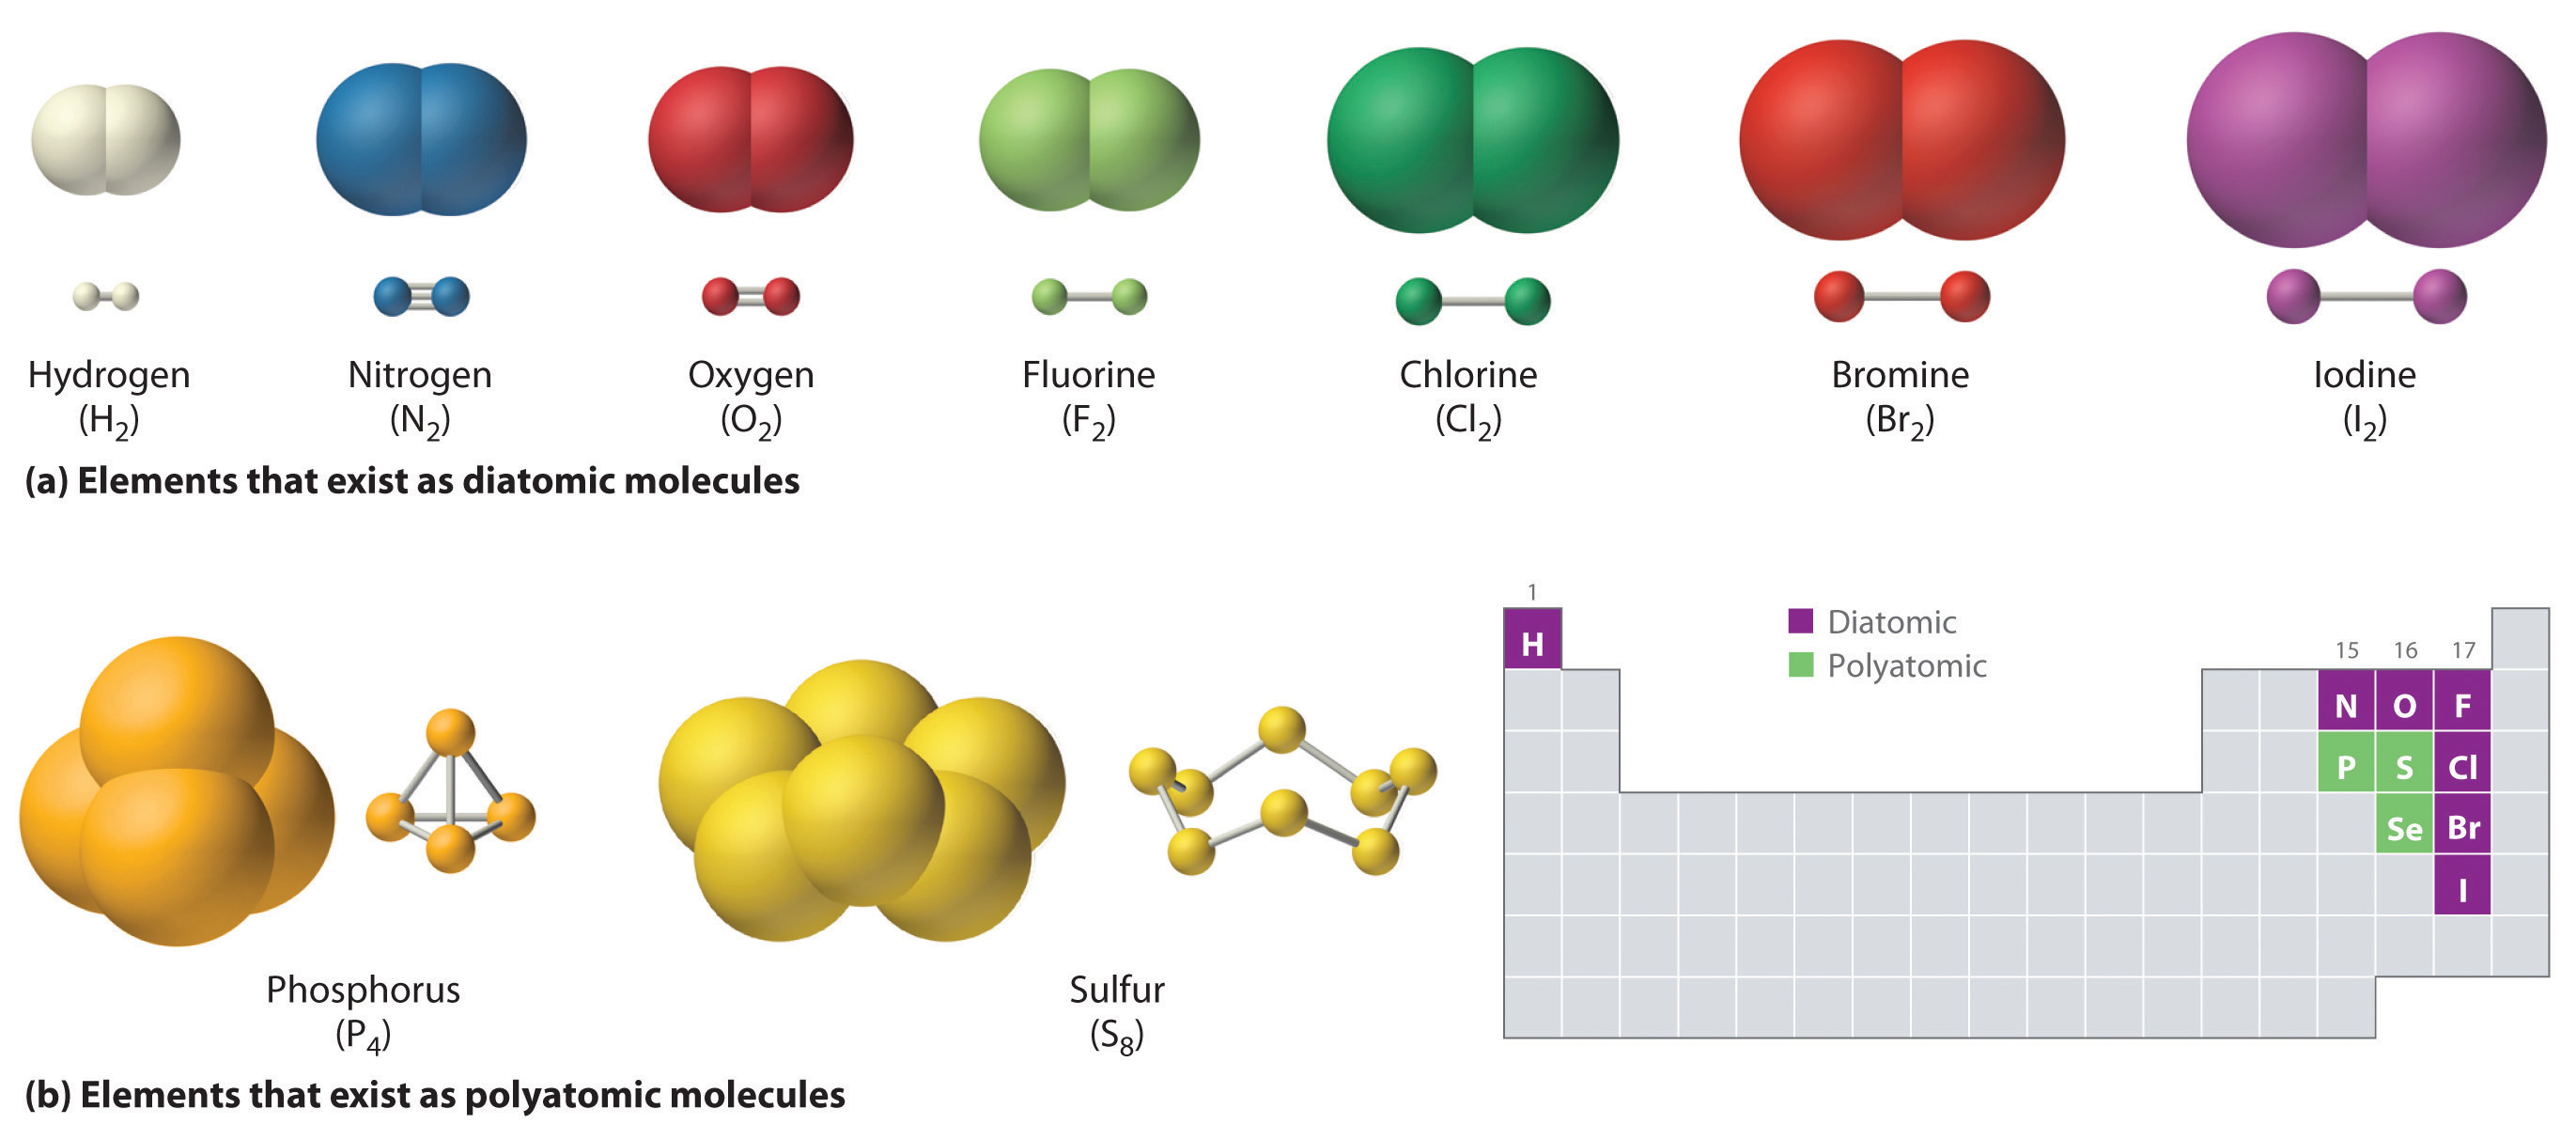 http://chemwiki.ucdavis.edu/Textbook_Maps/General_Chemistry_Textbook_Maps